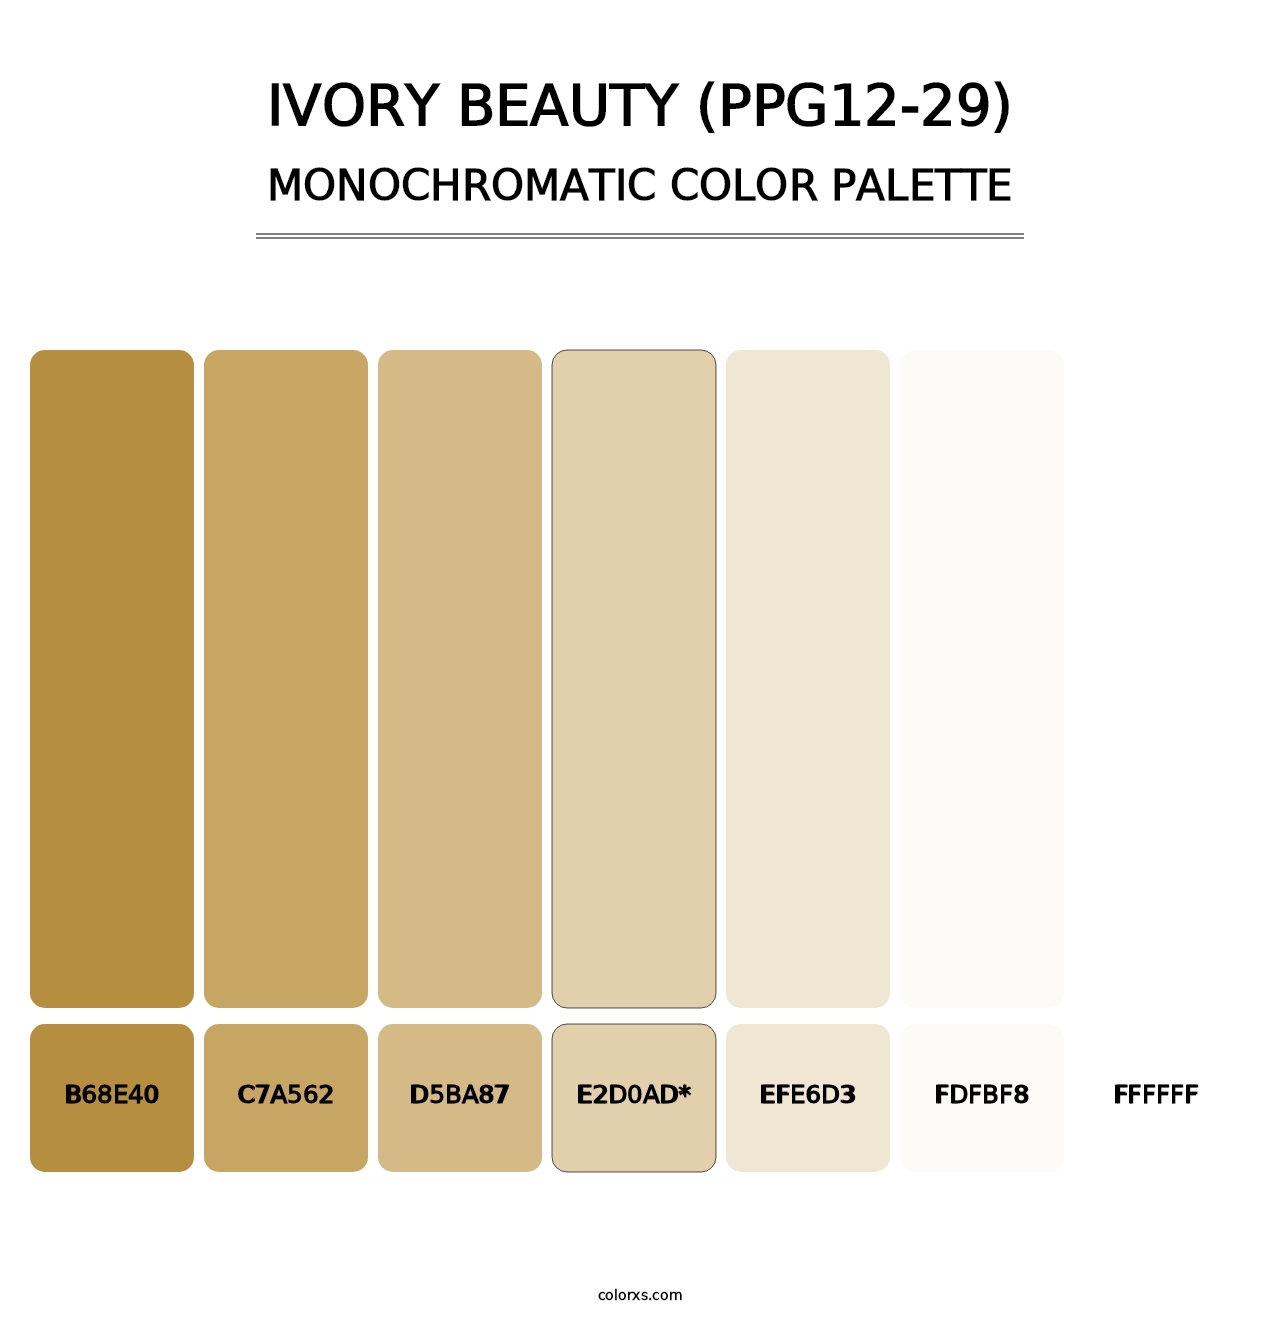 Ivory Beauty (PPG12-29) - Monochromatic Color Palette